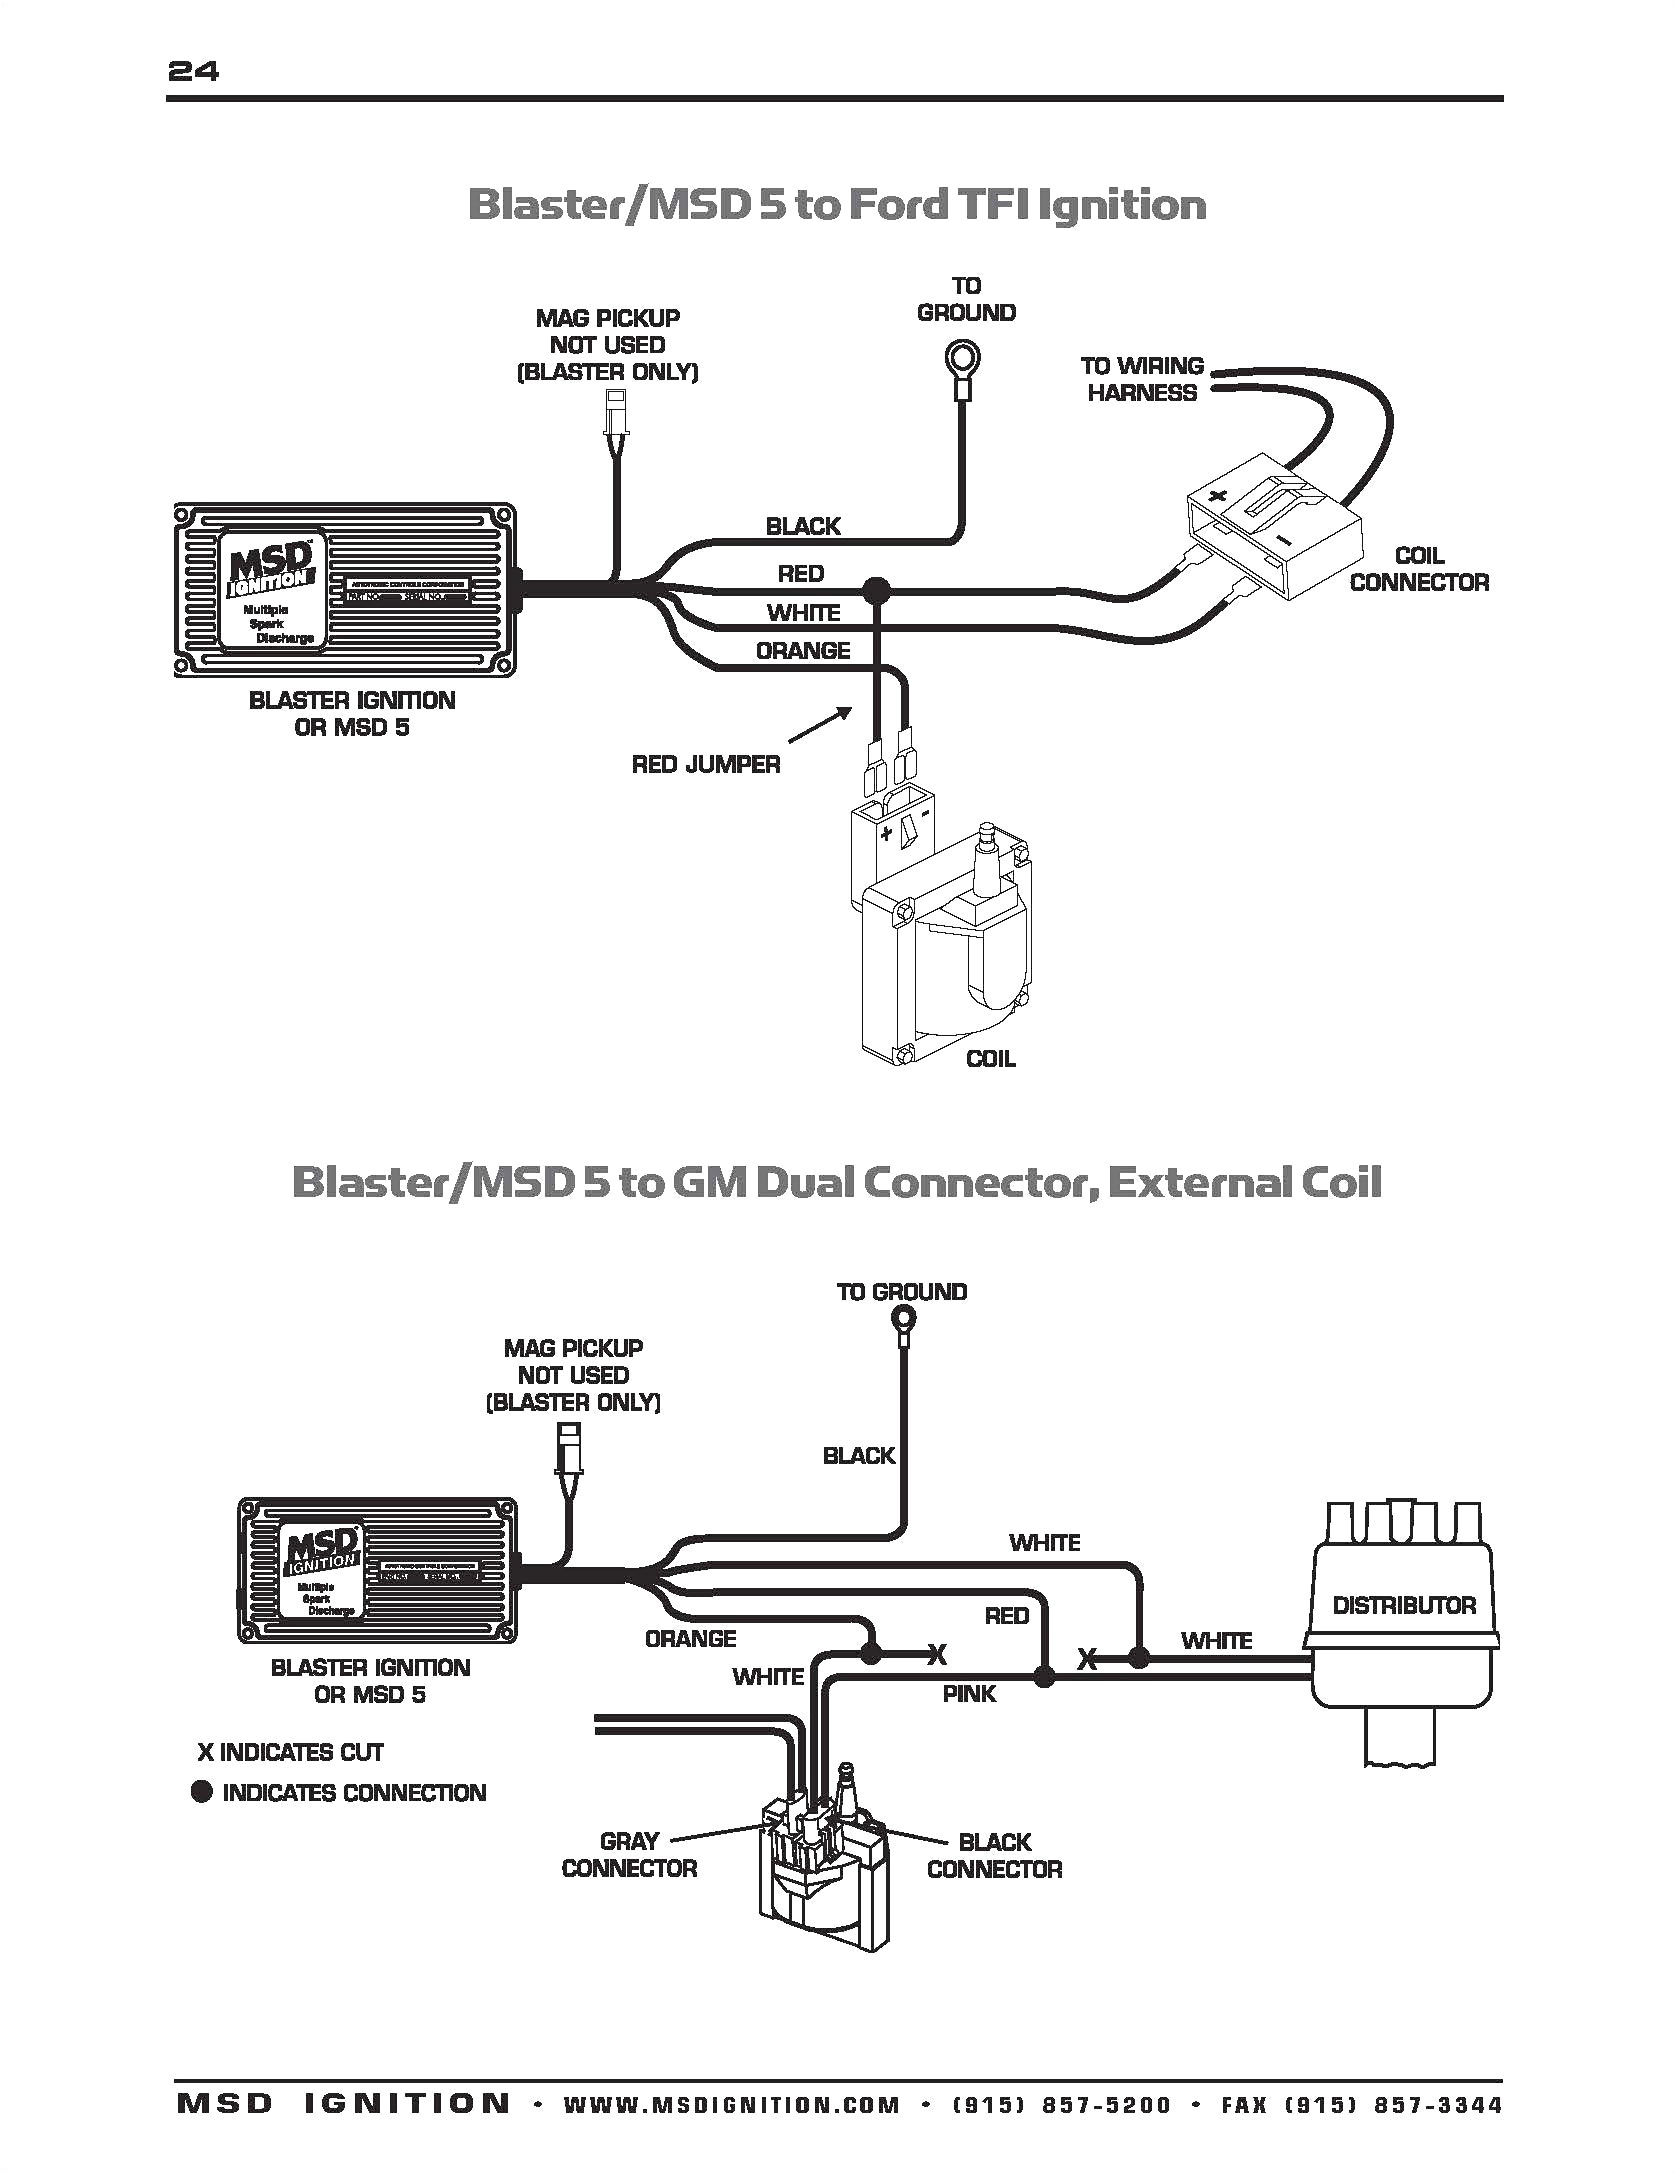 msd 5 wiring diagram motherwill com msd 5 wiring diagram msd 5 wiring diagram